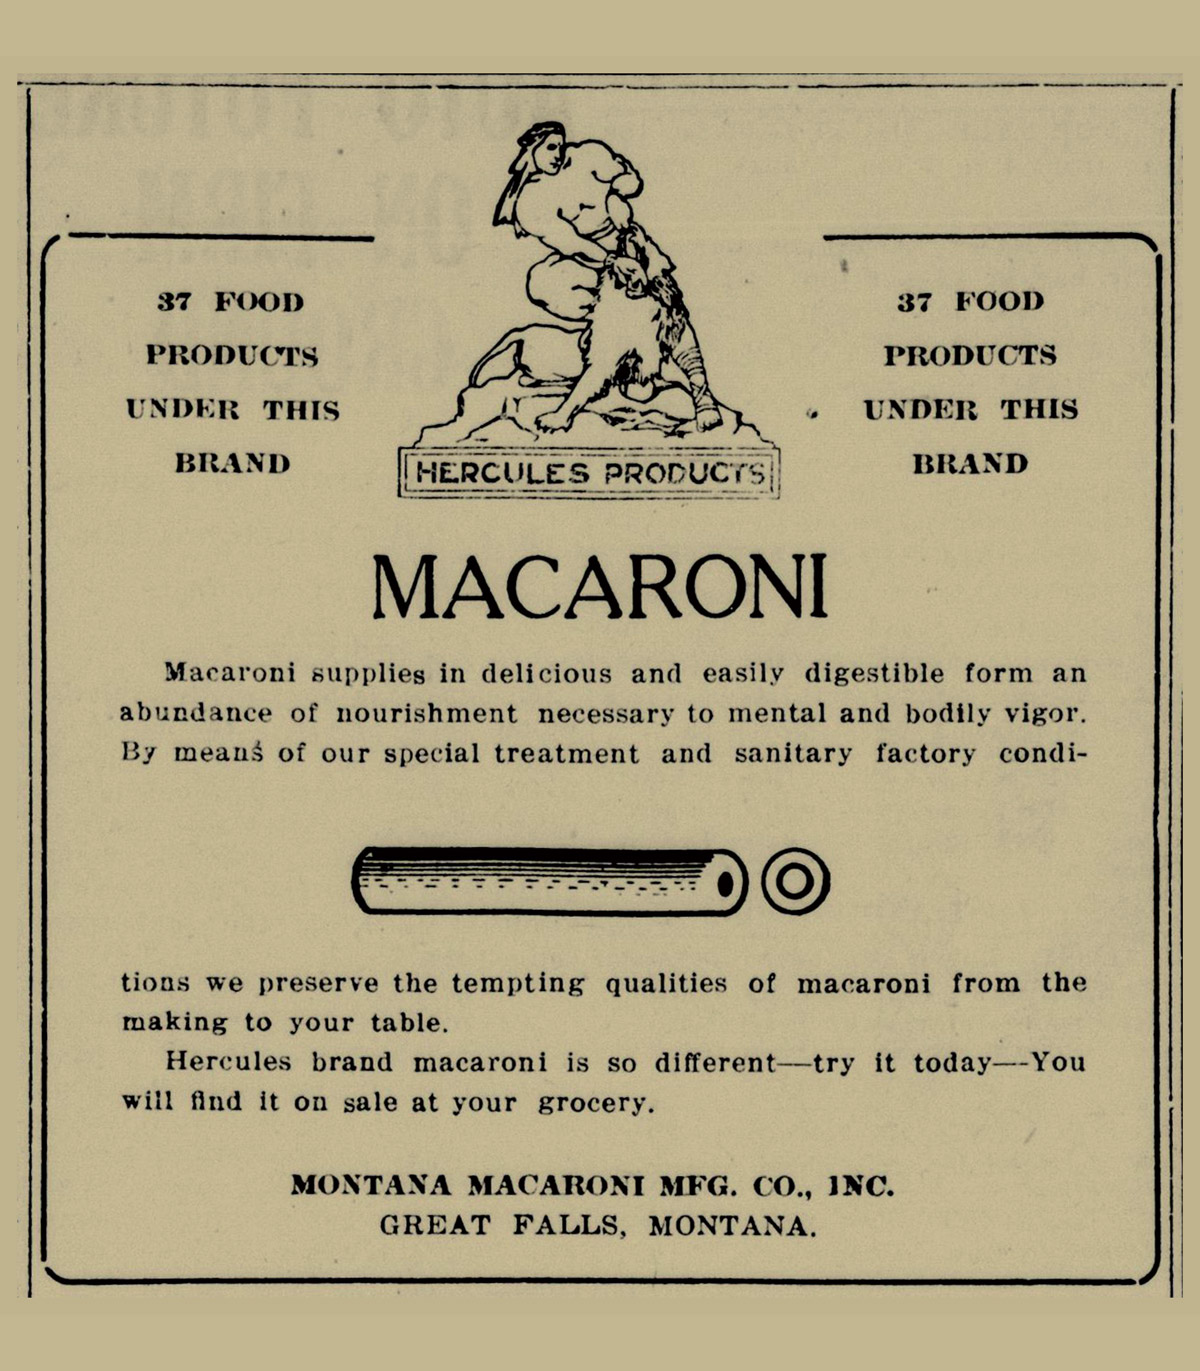 Montana Macaroni